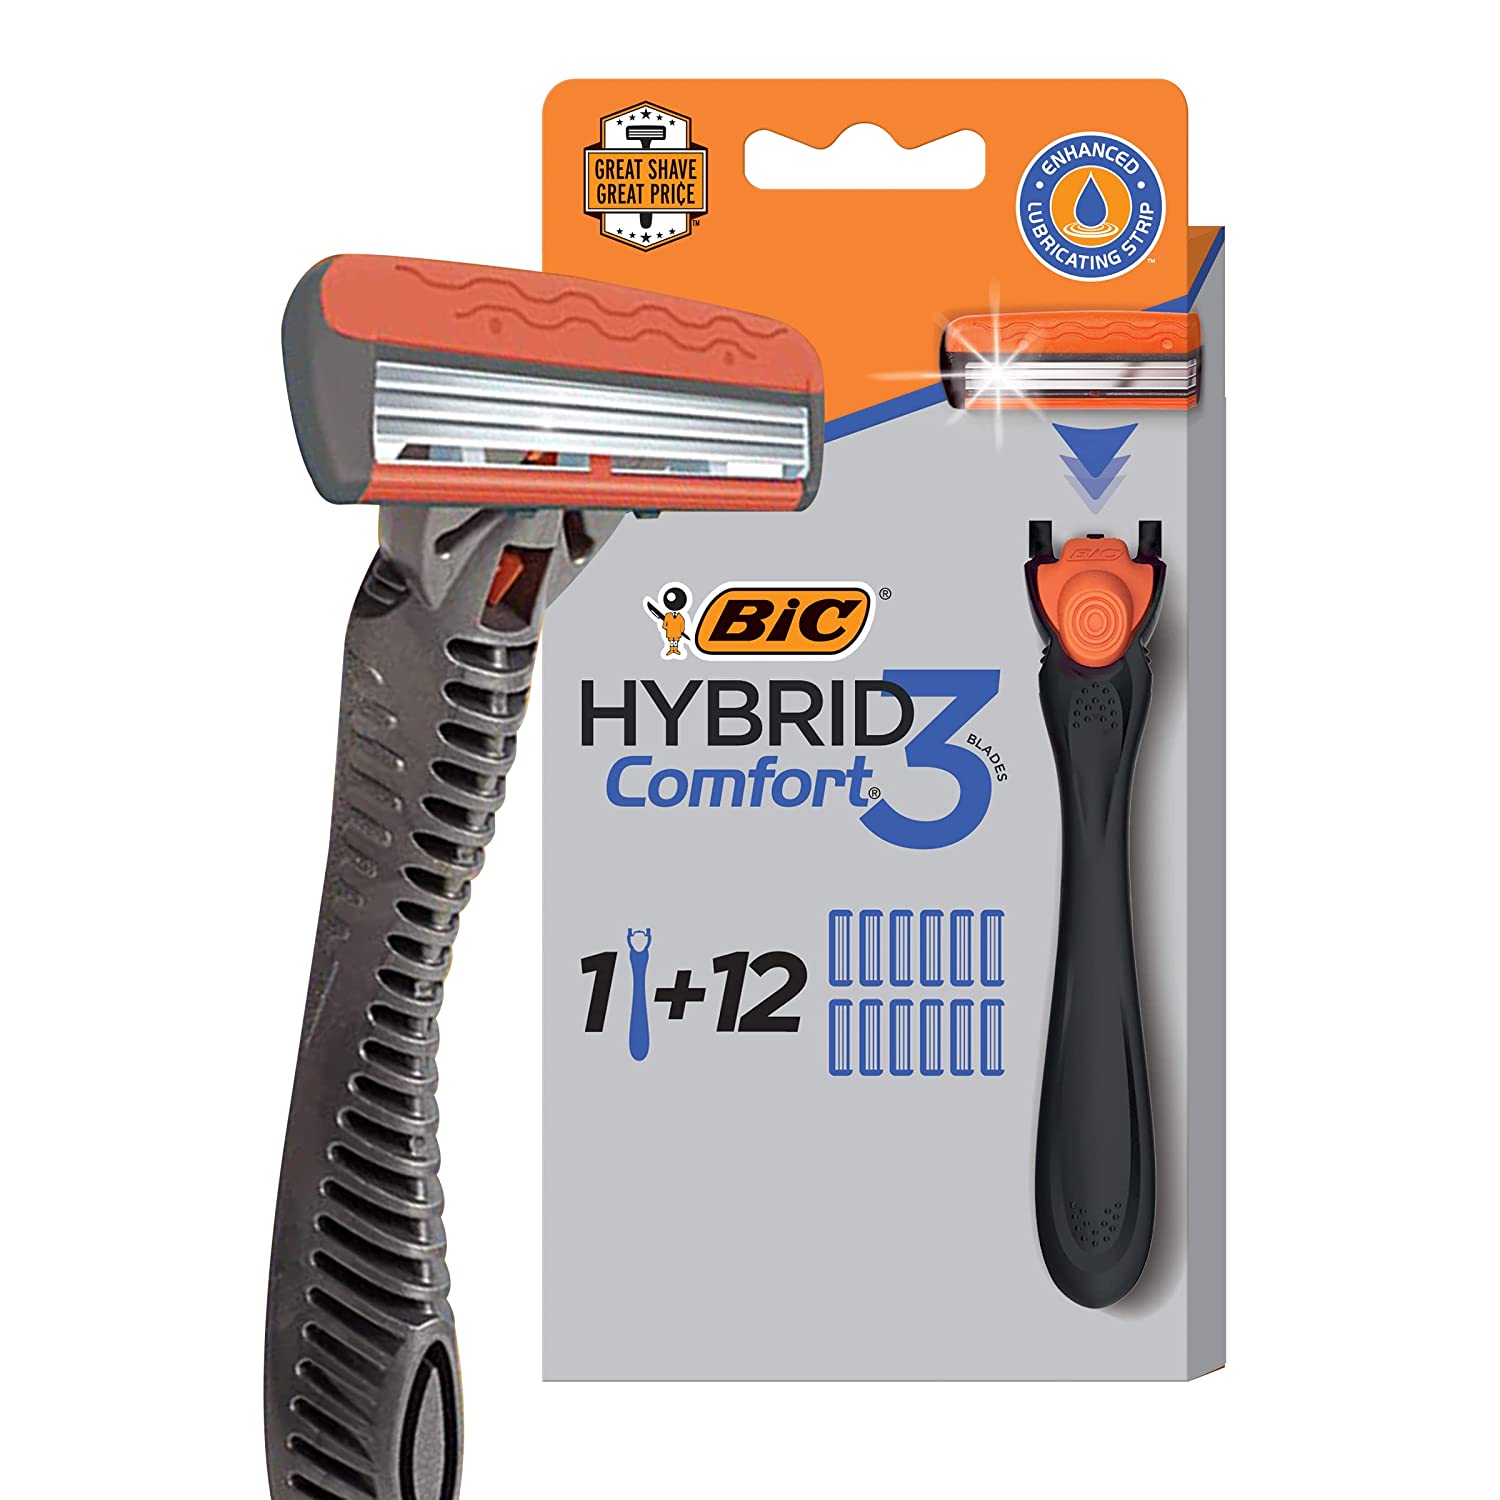 BIC Hybrid 3 Comfort Disposable Razors for Men 1 Handle 12 Cartridges $5.99 AC S&S Amazon